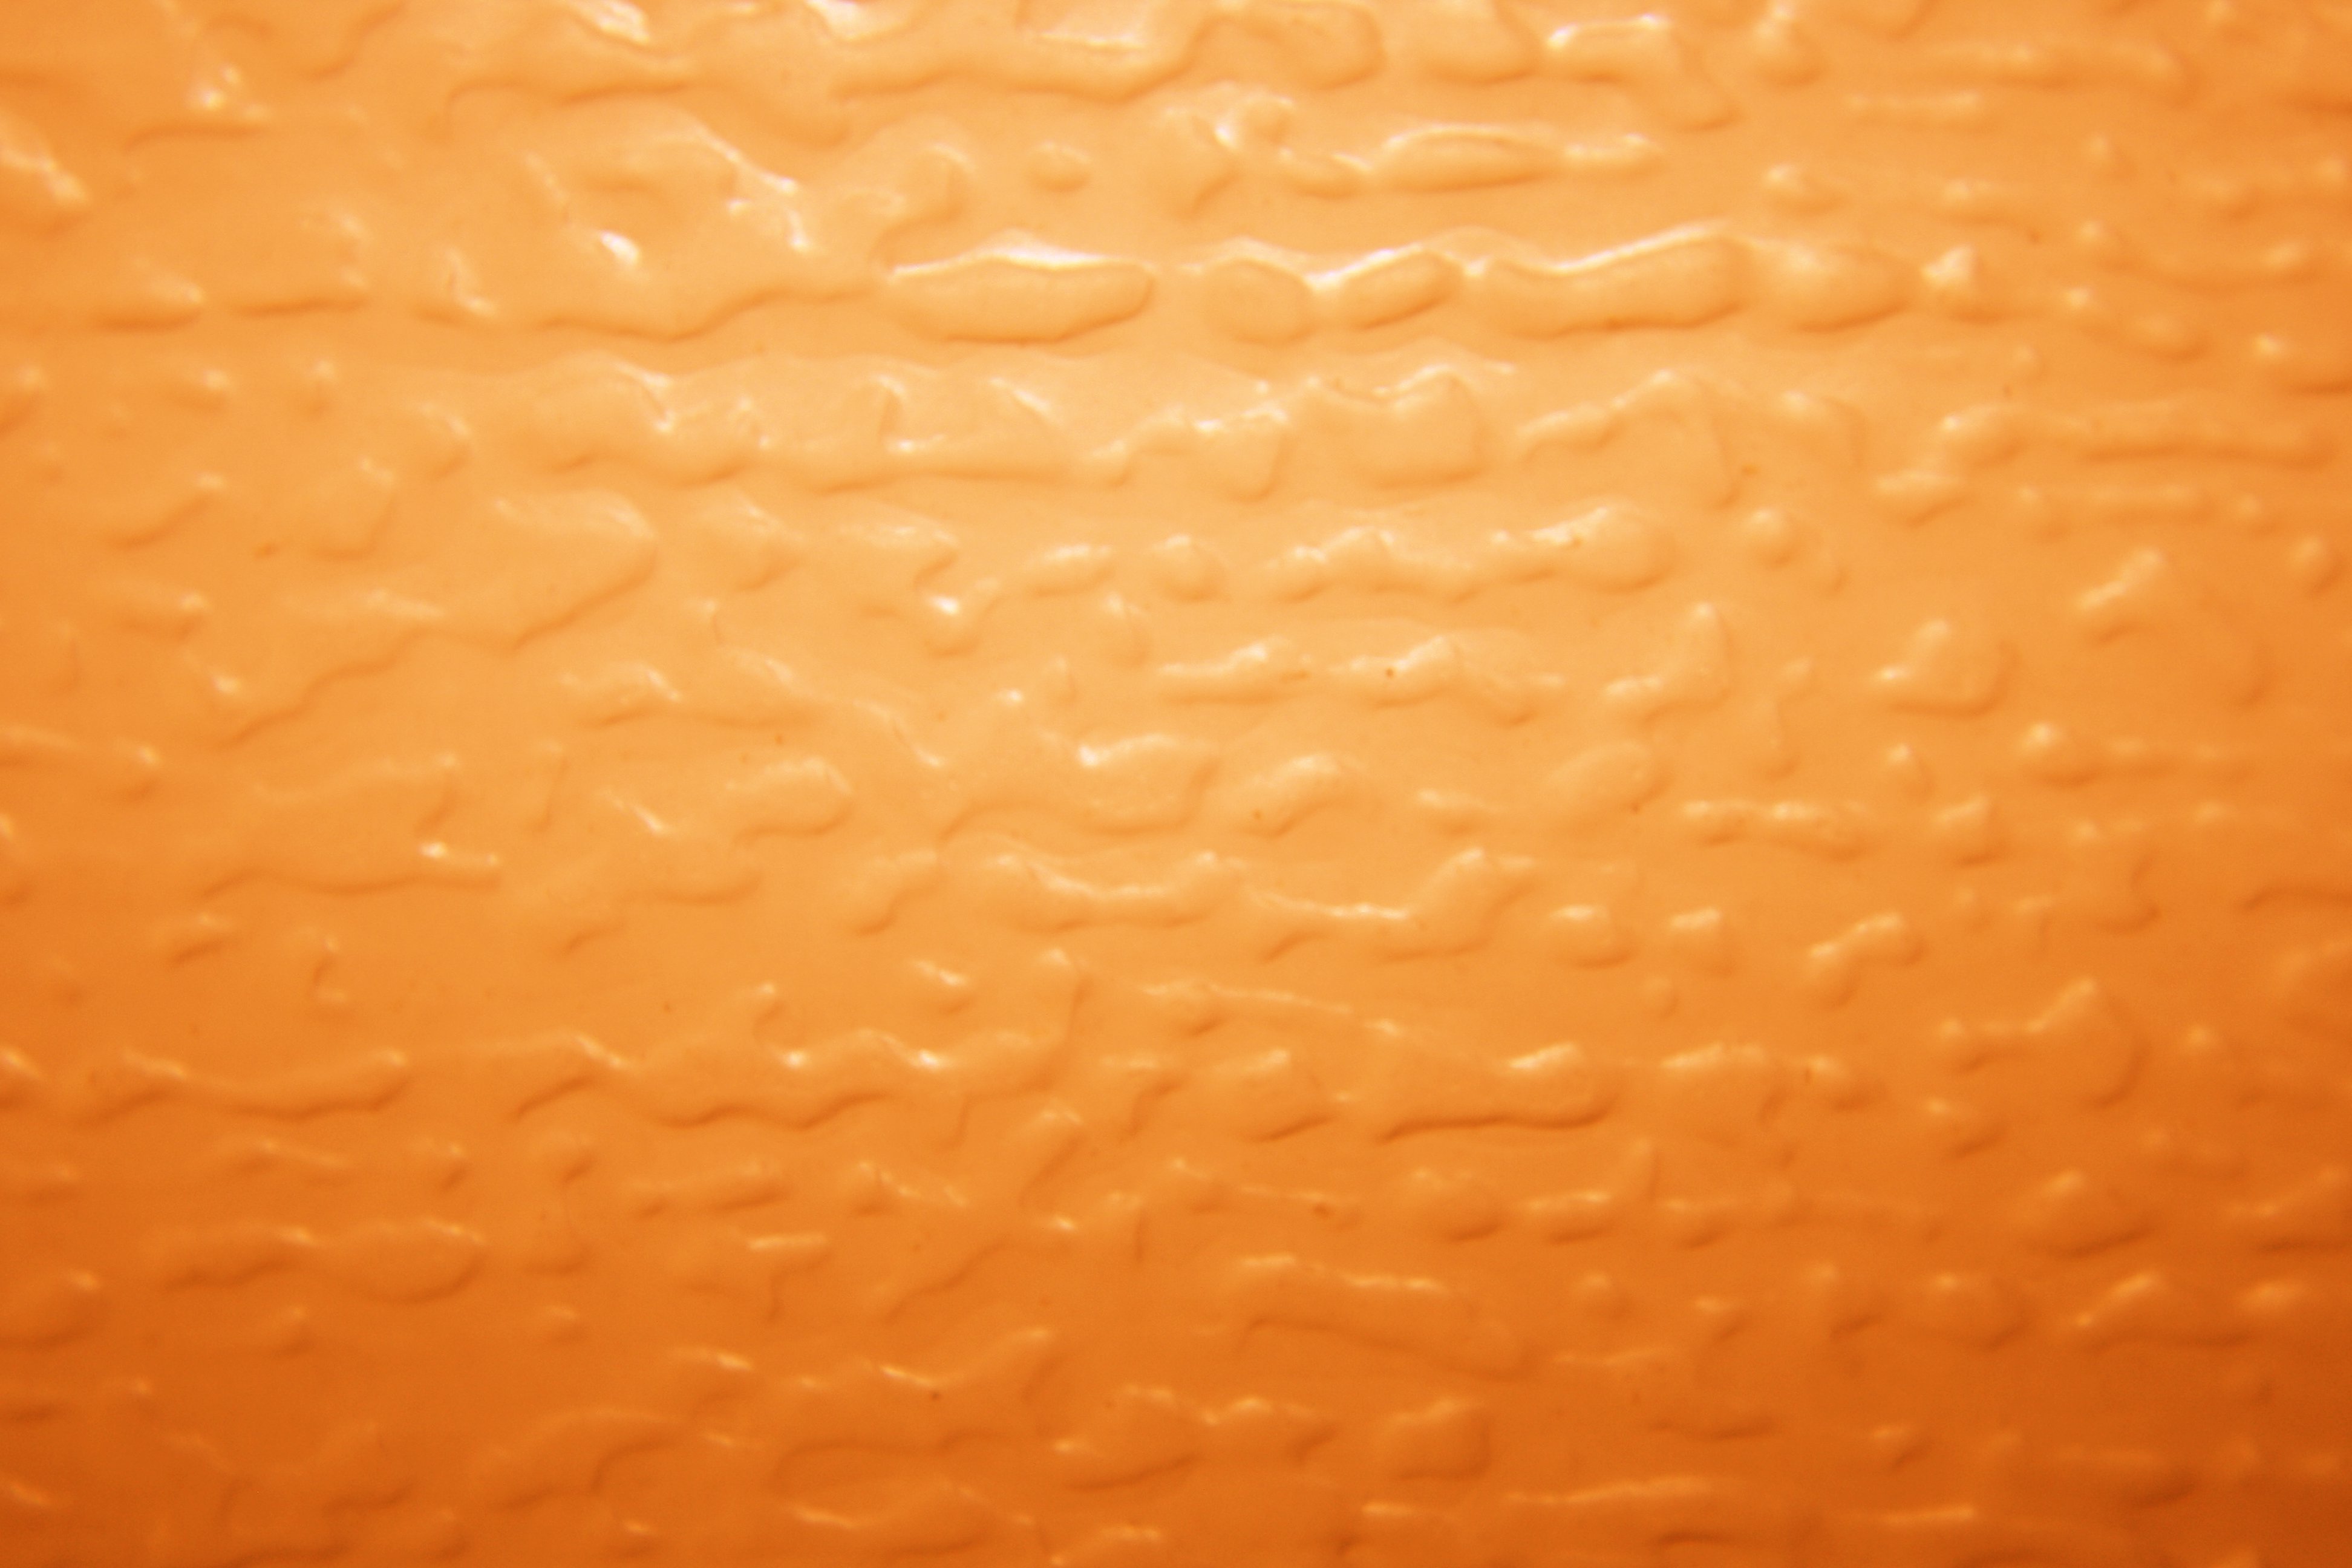 Orange Bumpy Plastic Texture Picture | Free Photograph | Photos ...